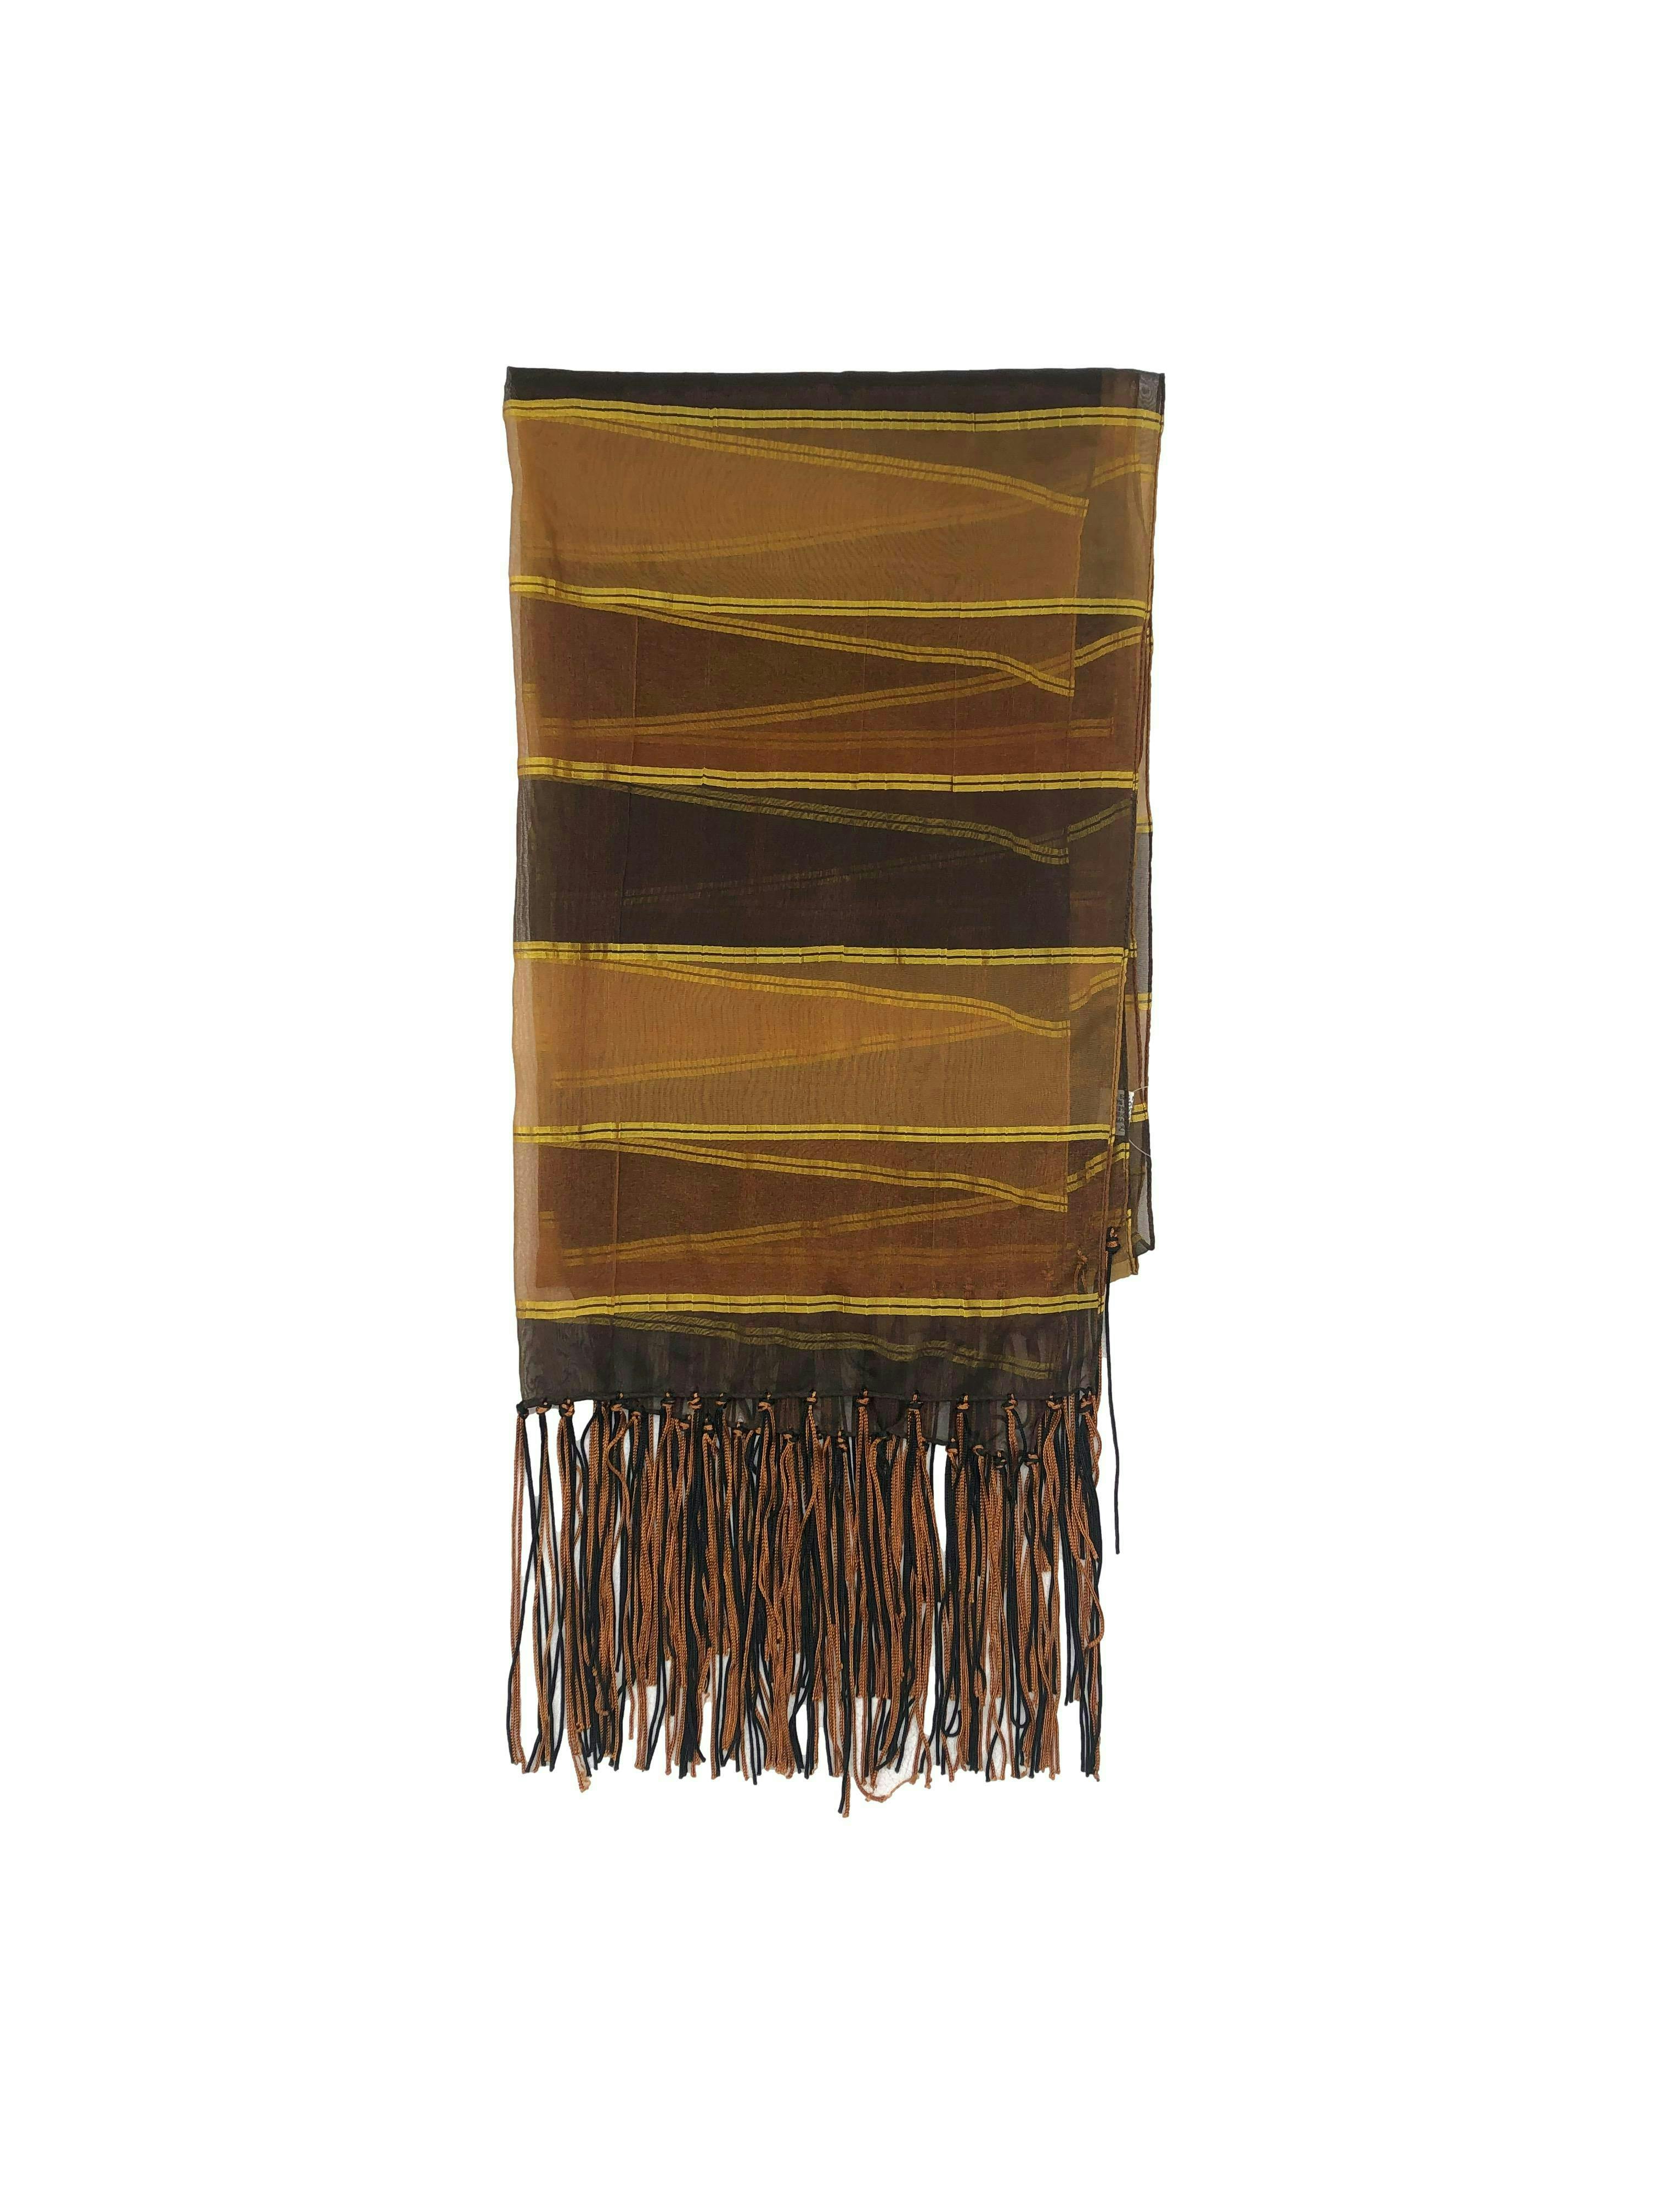 Pañuelo de gasa en tonos marrones a rayas doradas y flecos, Ancho 54cm, Largo 172cm